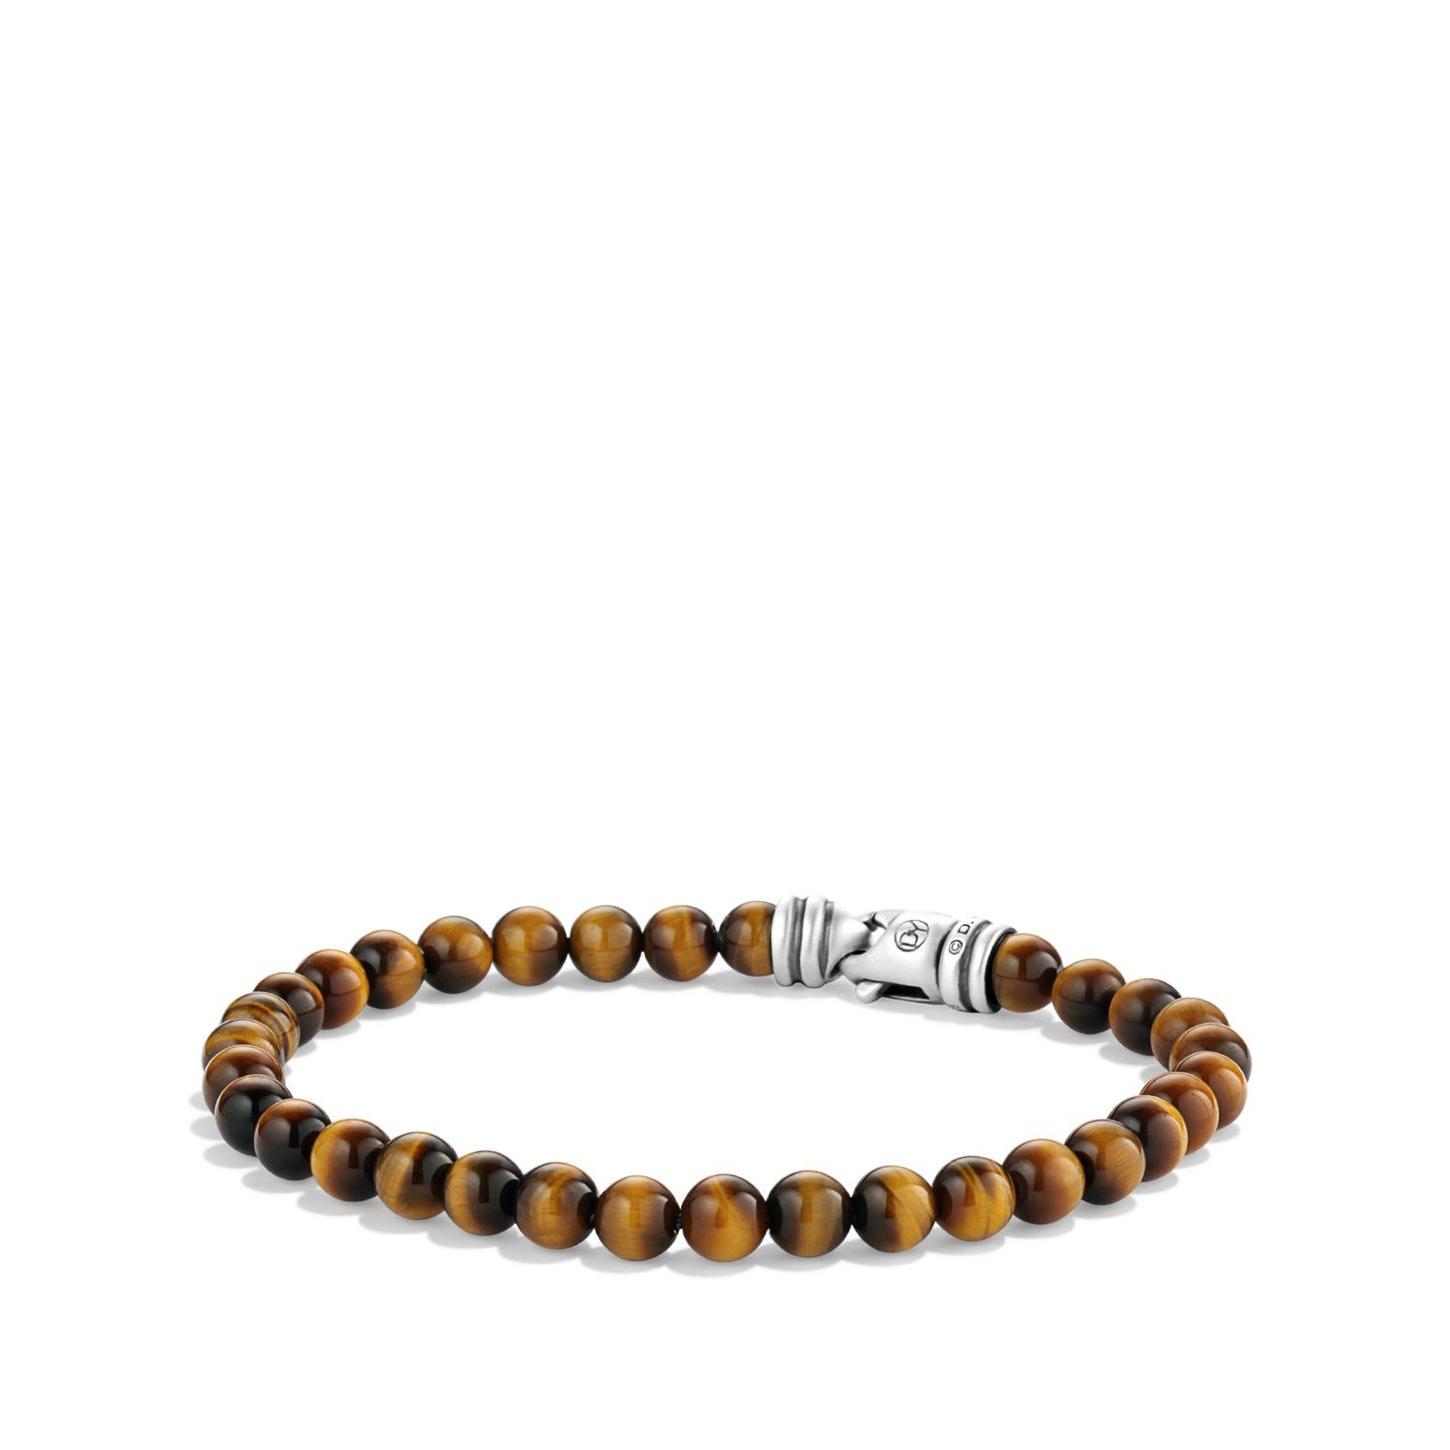 David Yurman 6mm Spiritual Beads Bracelet with Tiger's Eye, 8" 0